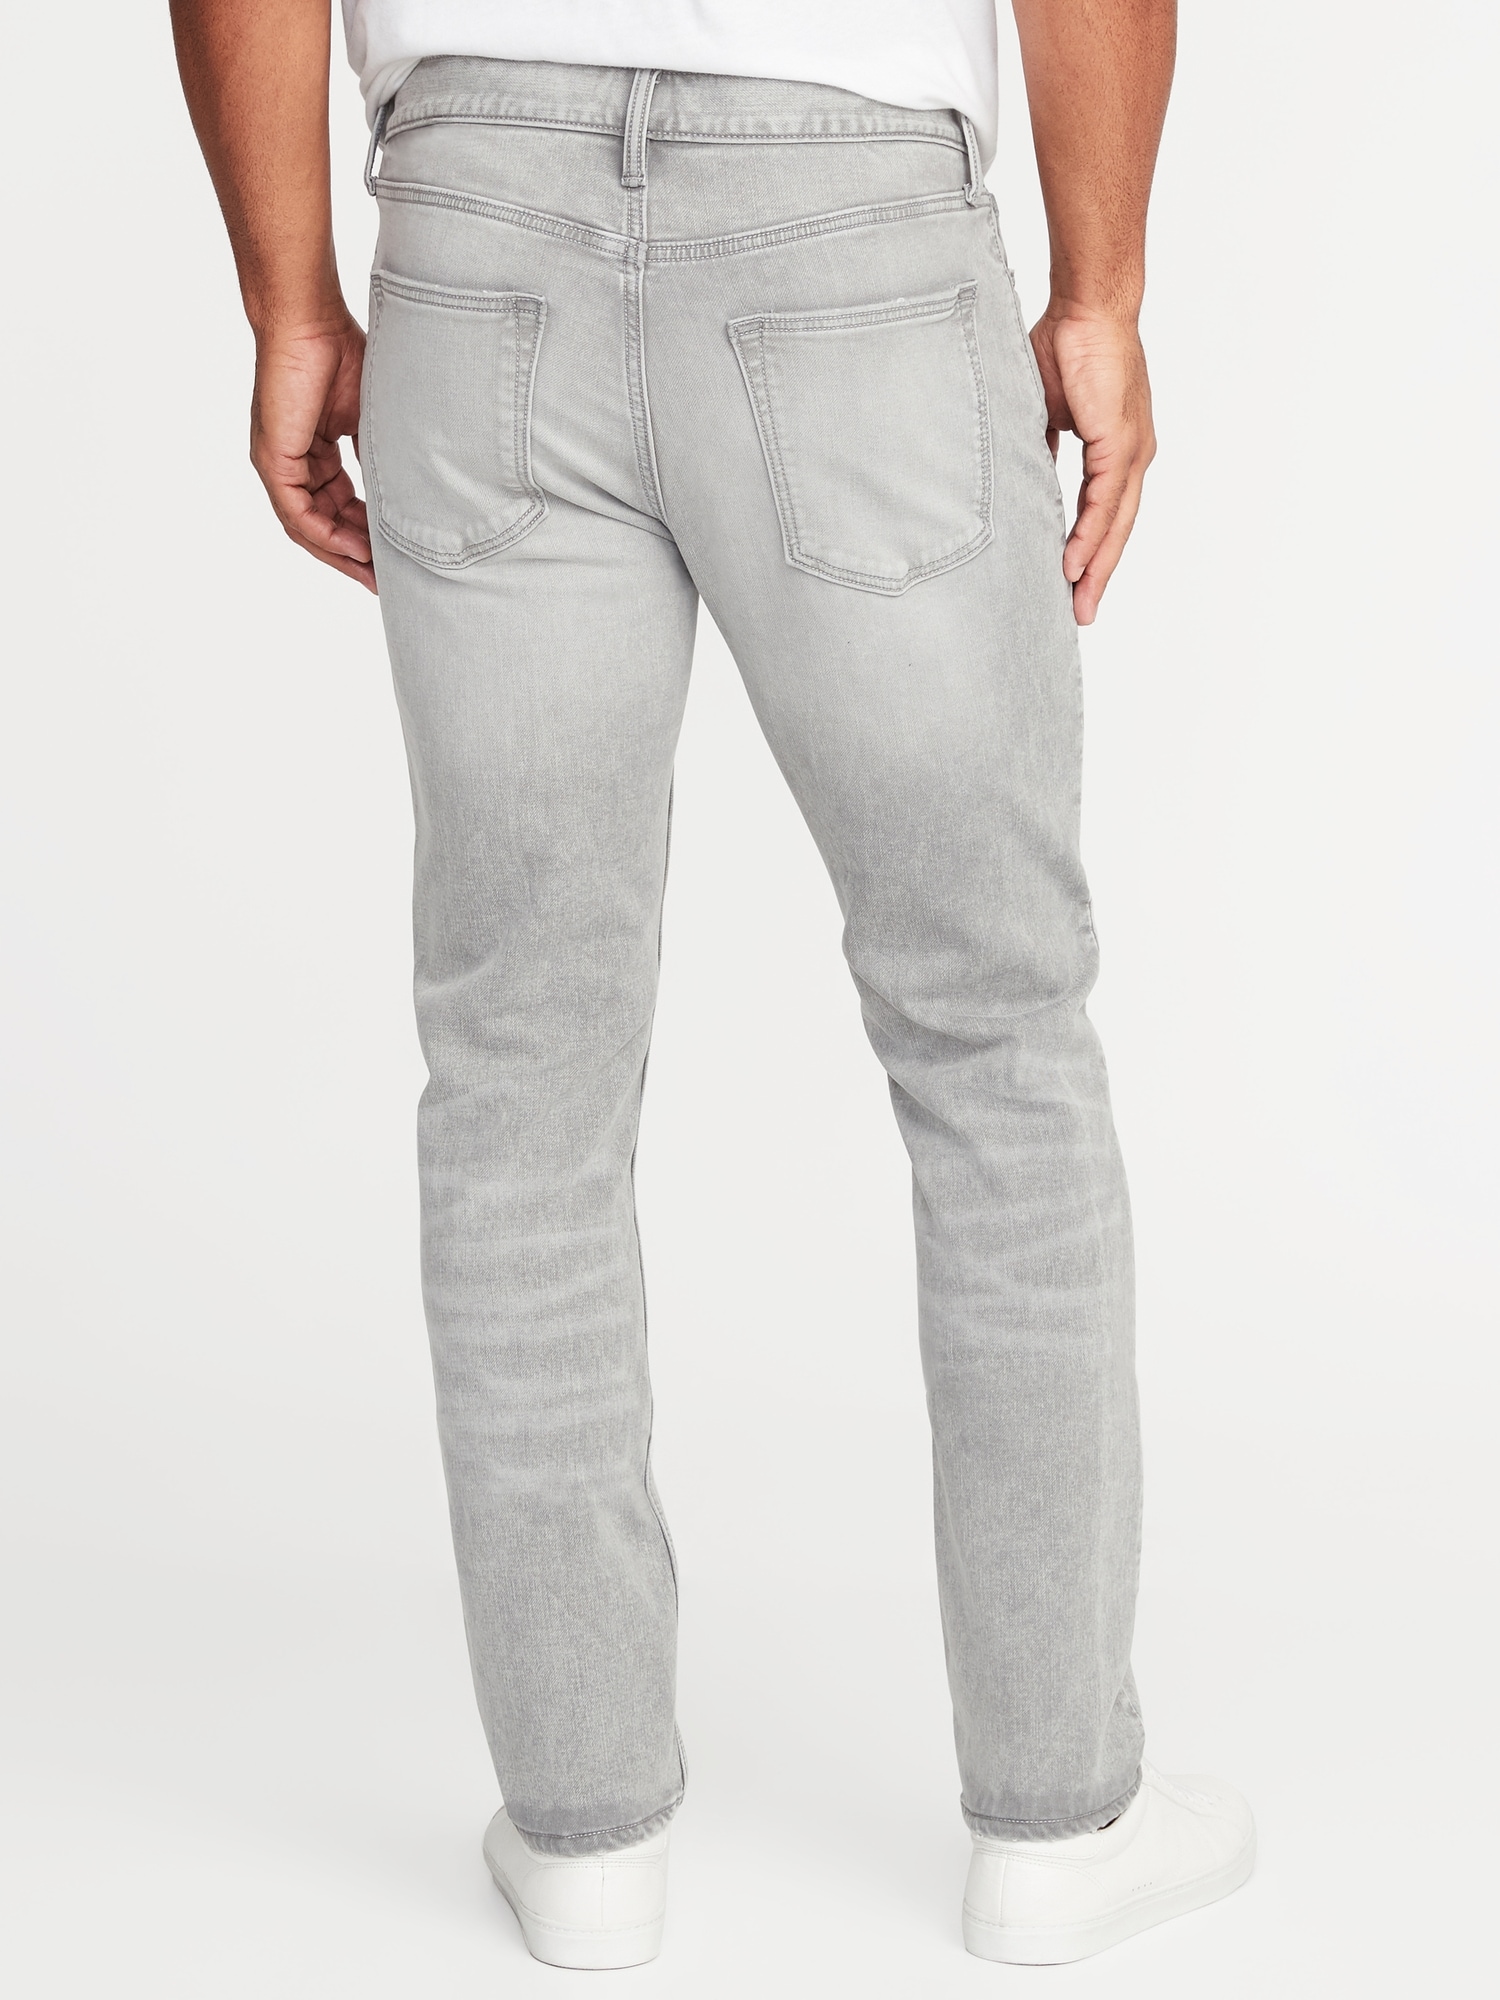 mens grey jeans regular fit